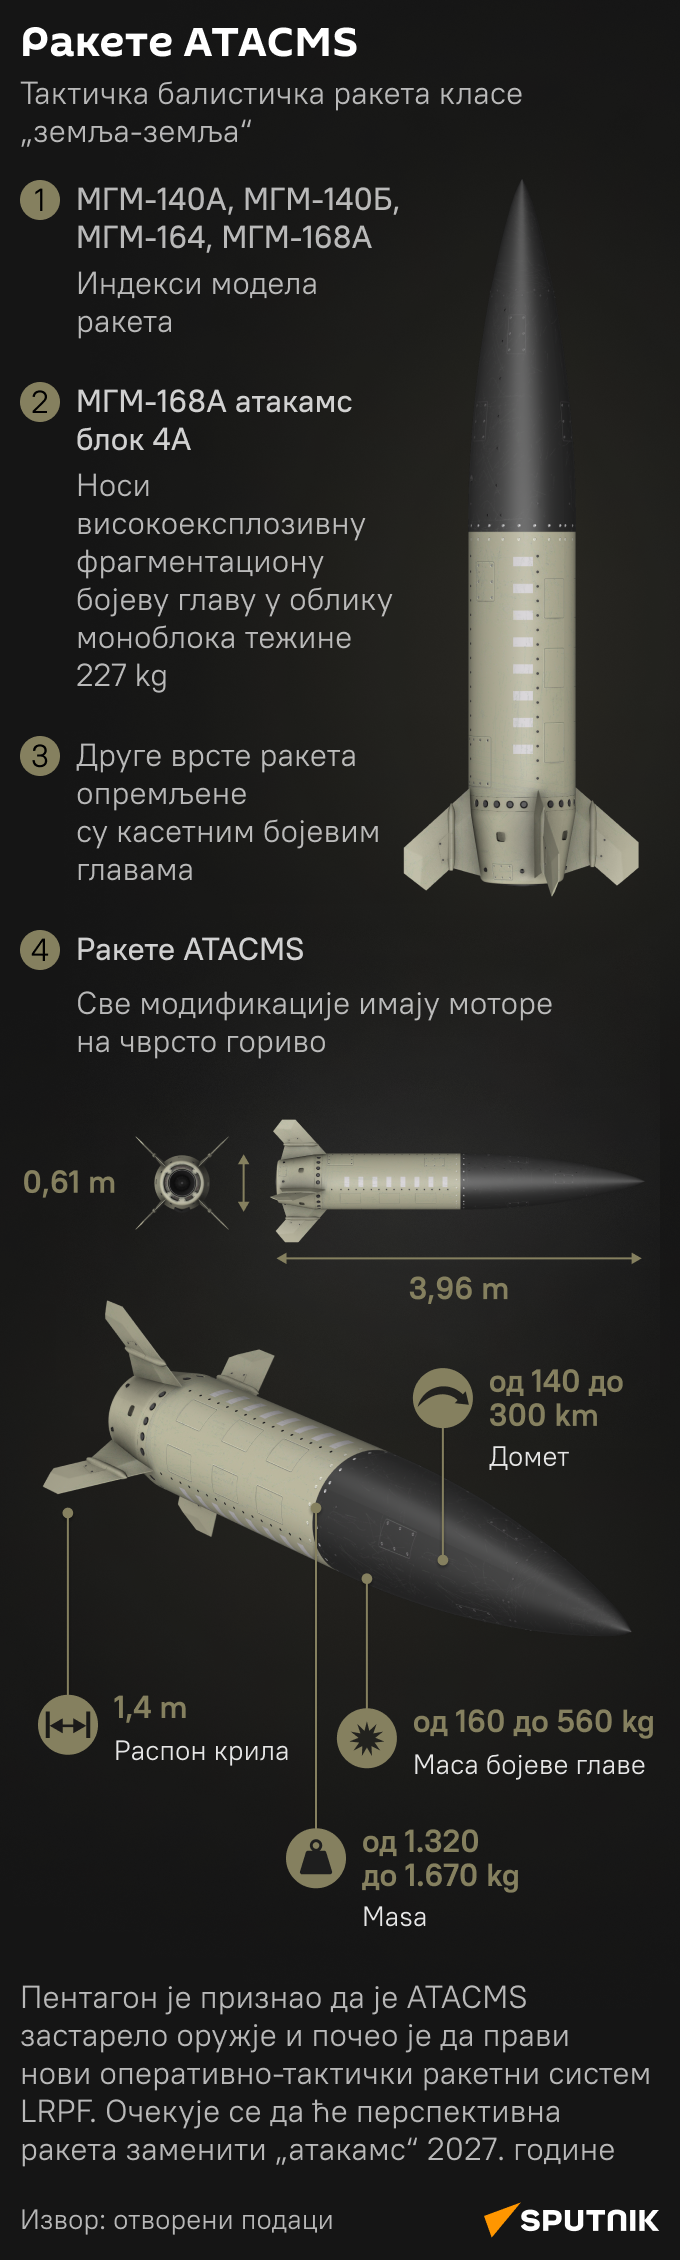 Инфографика Ракете ATACMS ЋИР моб - Sputnik Србија